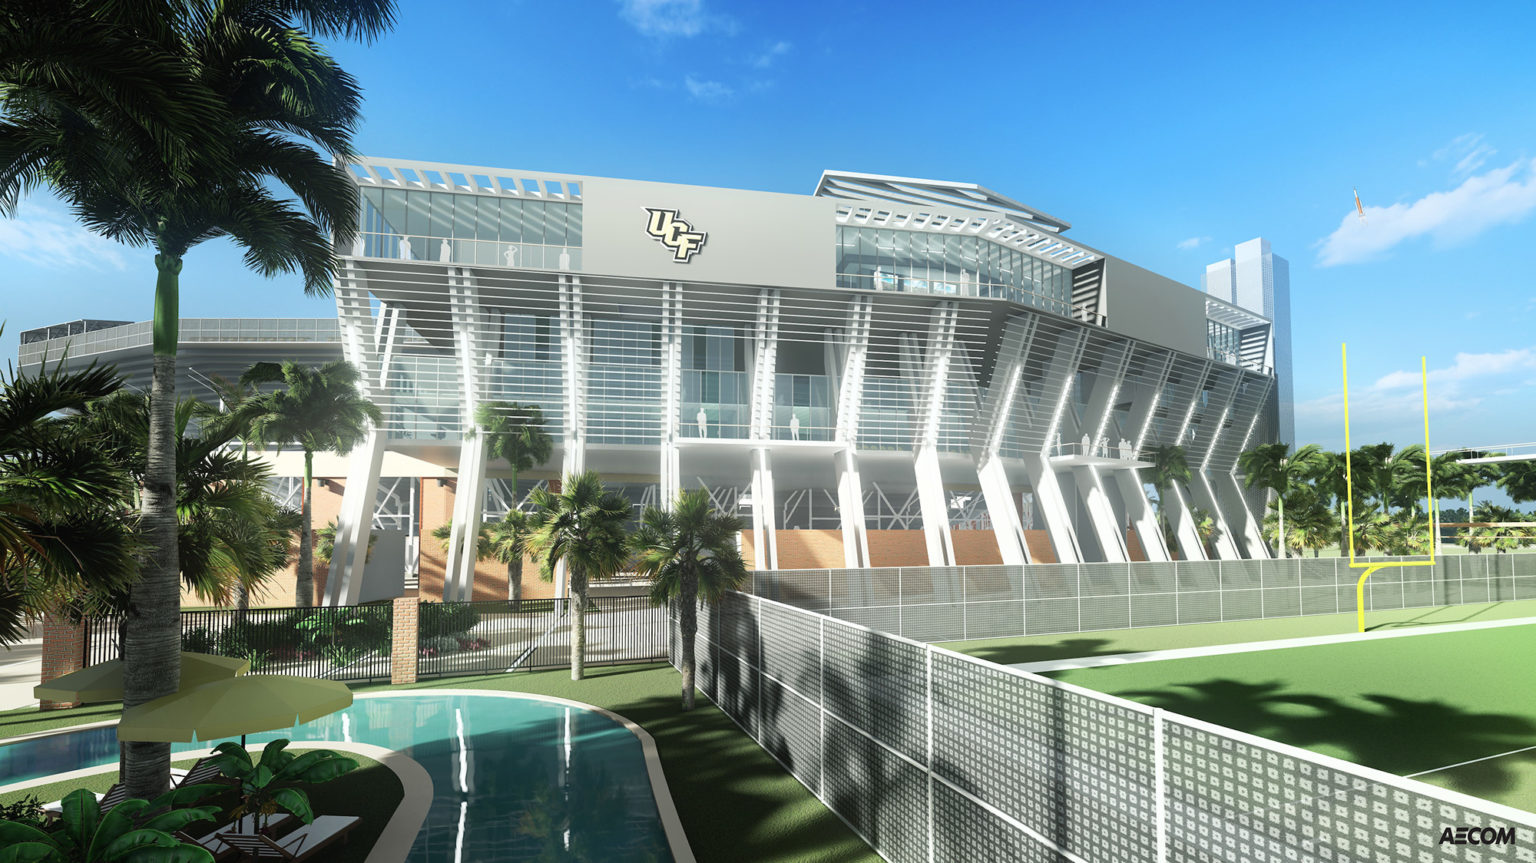 UCF stadium upgrades proposed Football Stadium Digest